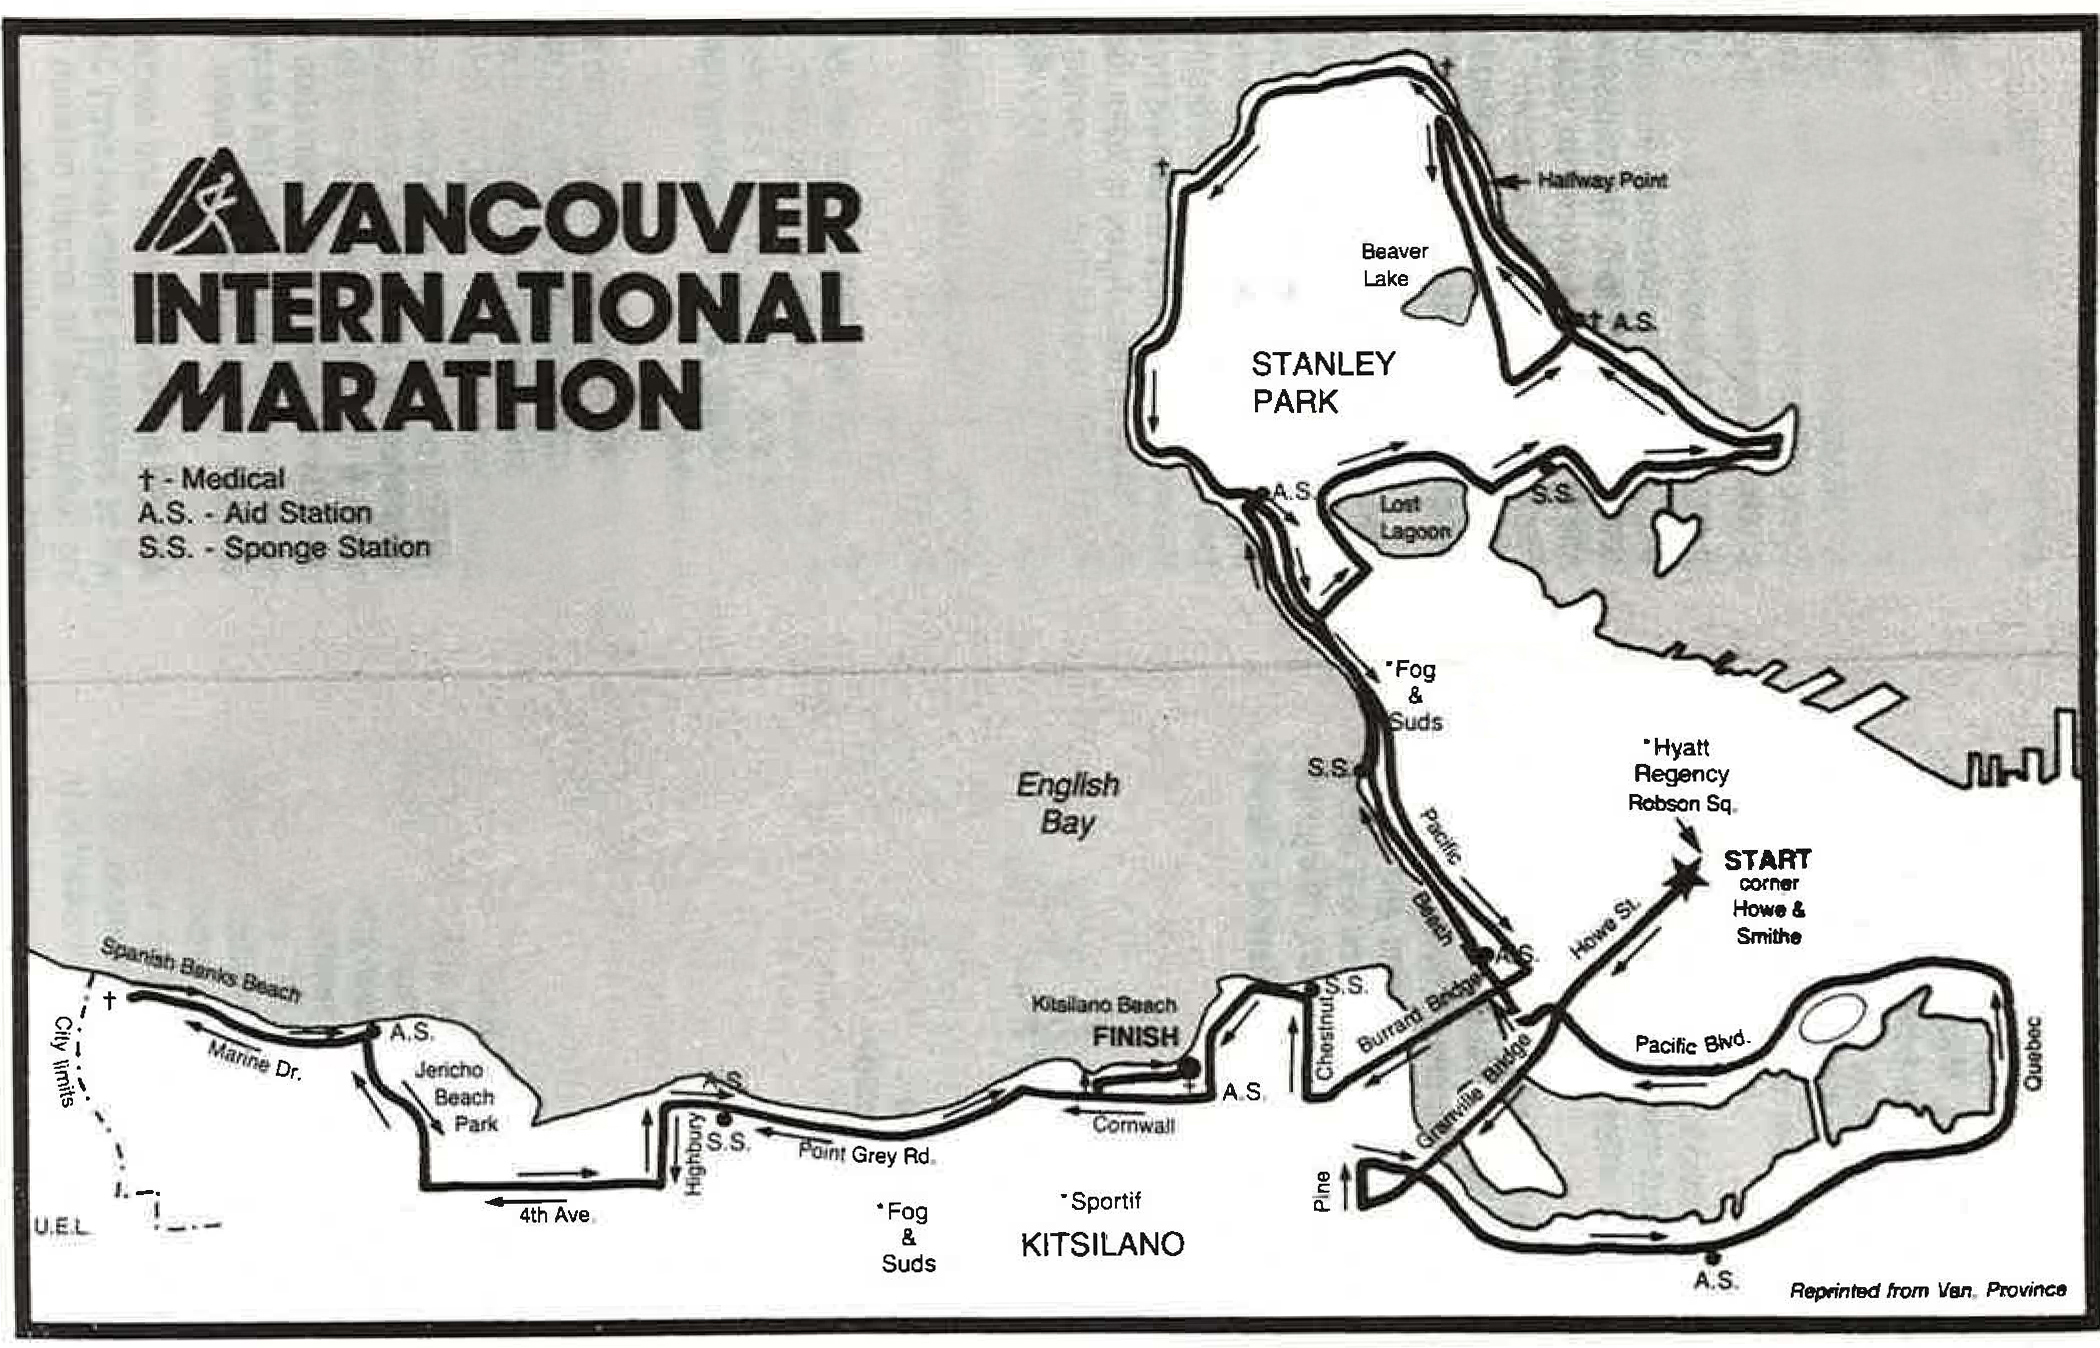 1986 Marathon Course. Vancouver Marathon RUNVAN